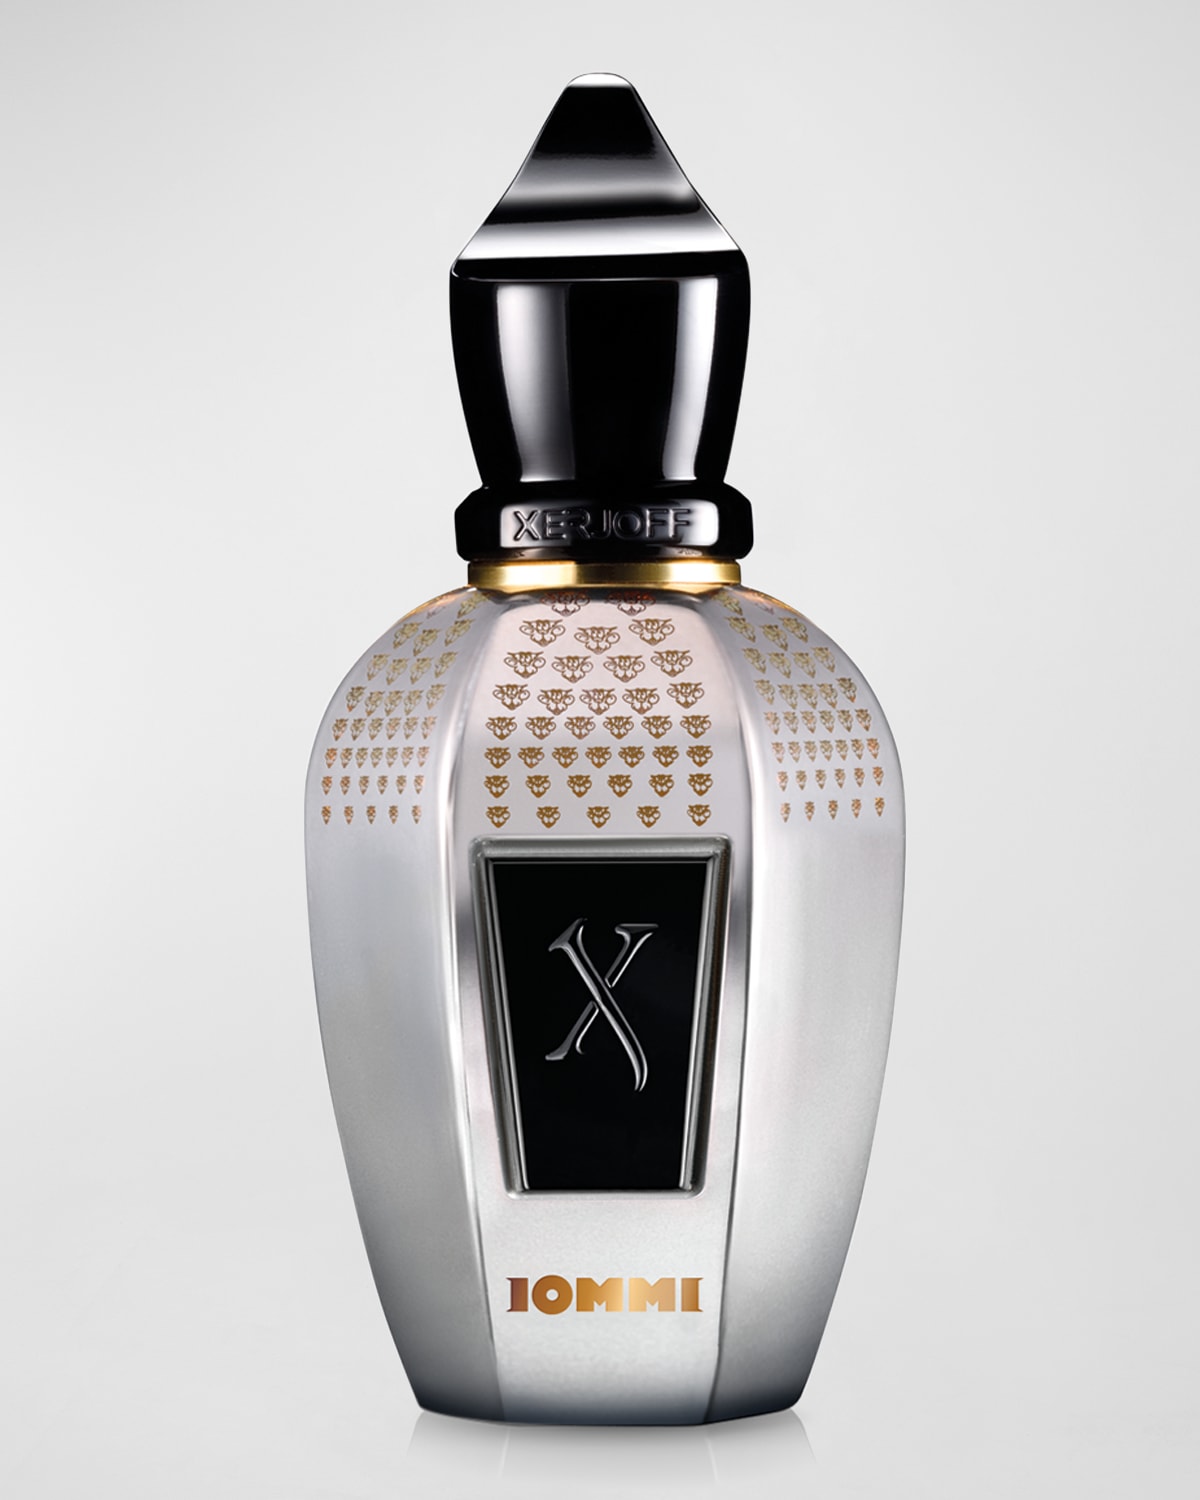 Tony Iommi Monkey Special Parfum, 1.7 oz. - Xerjoff Blends Collection